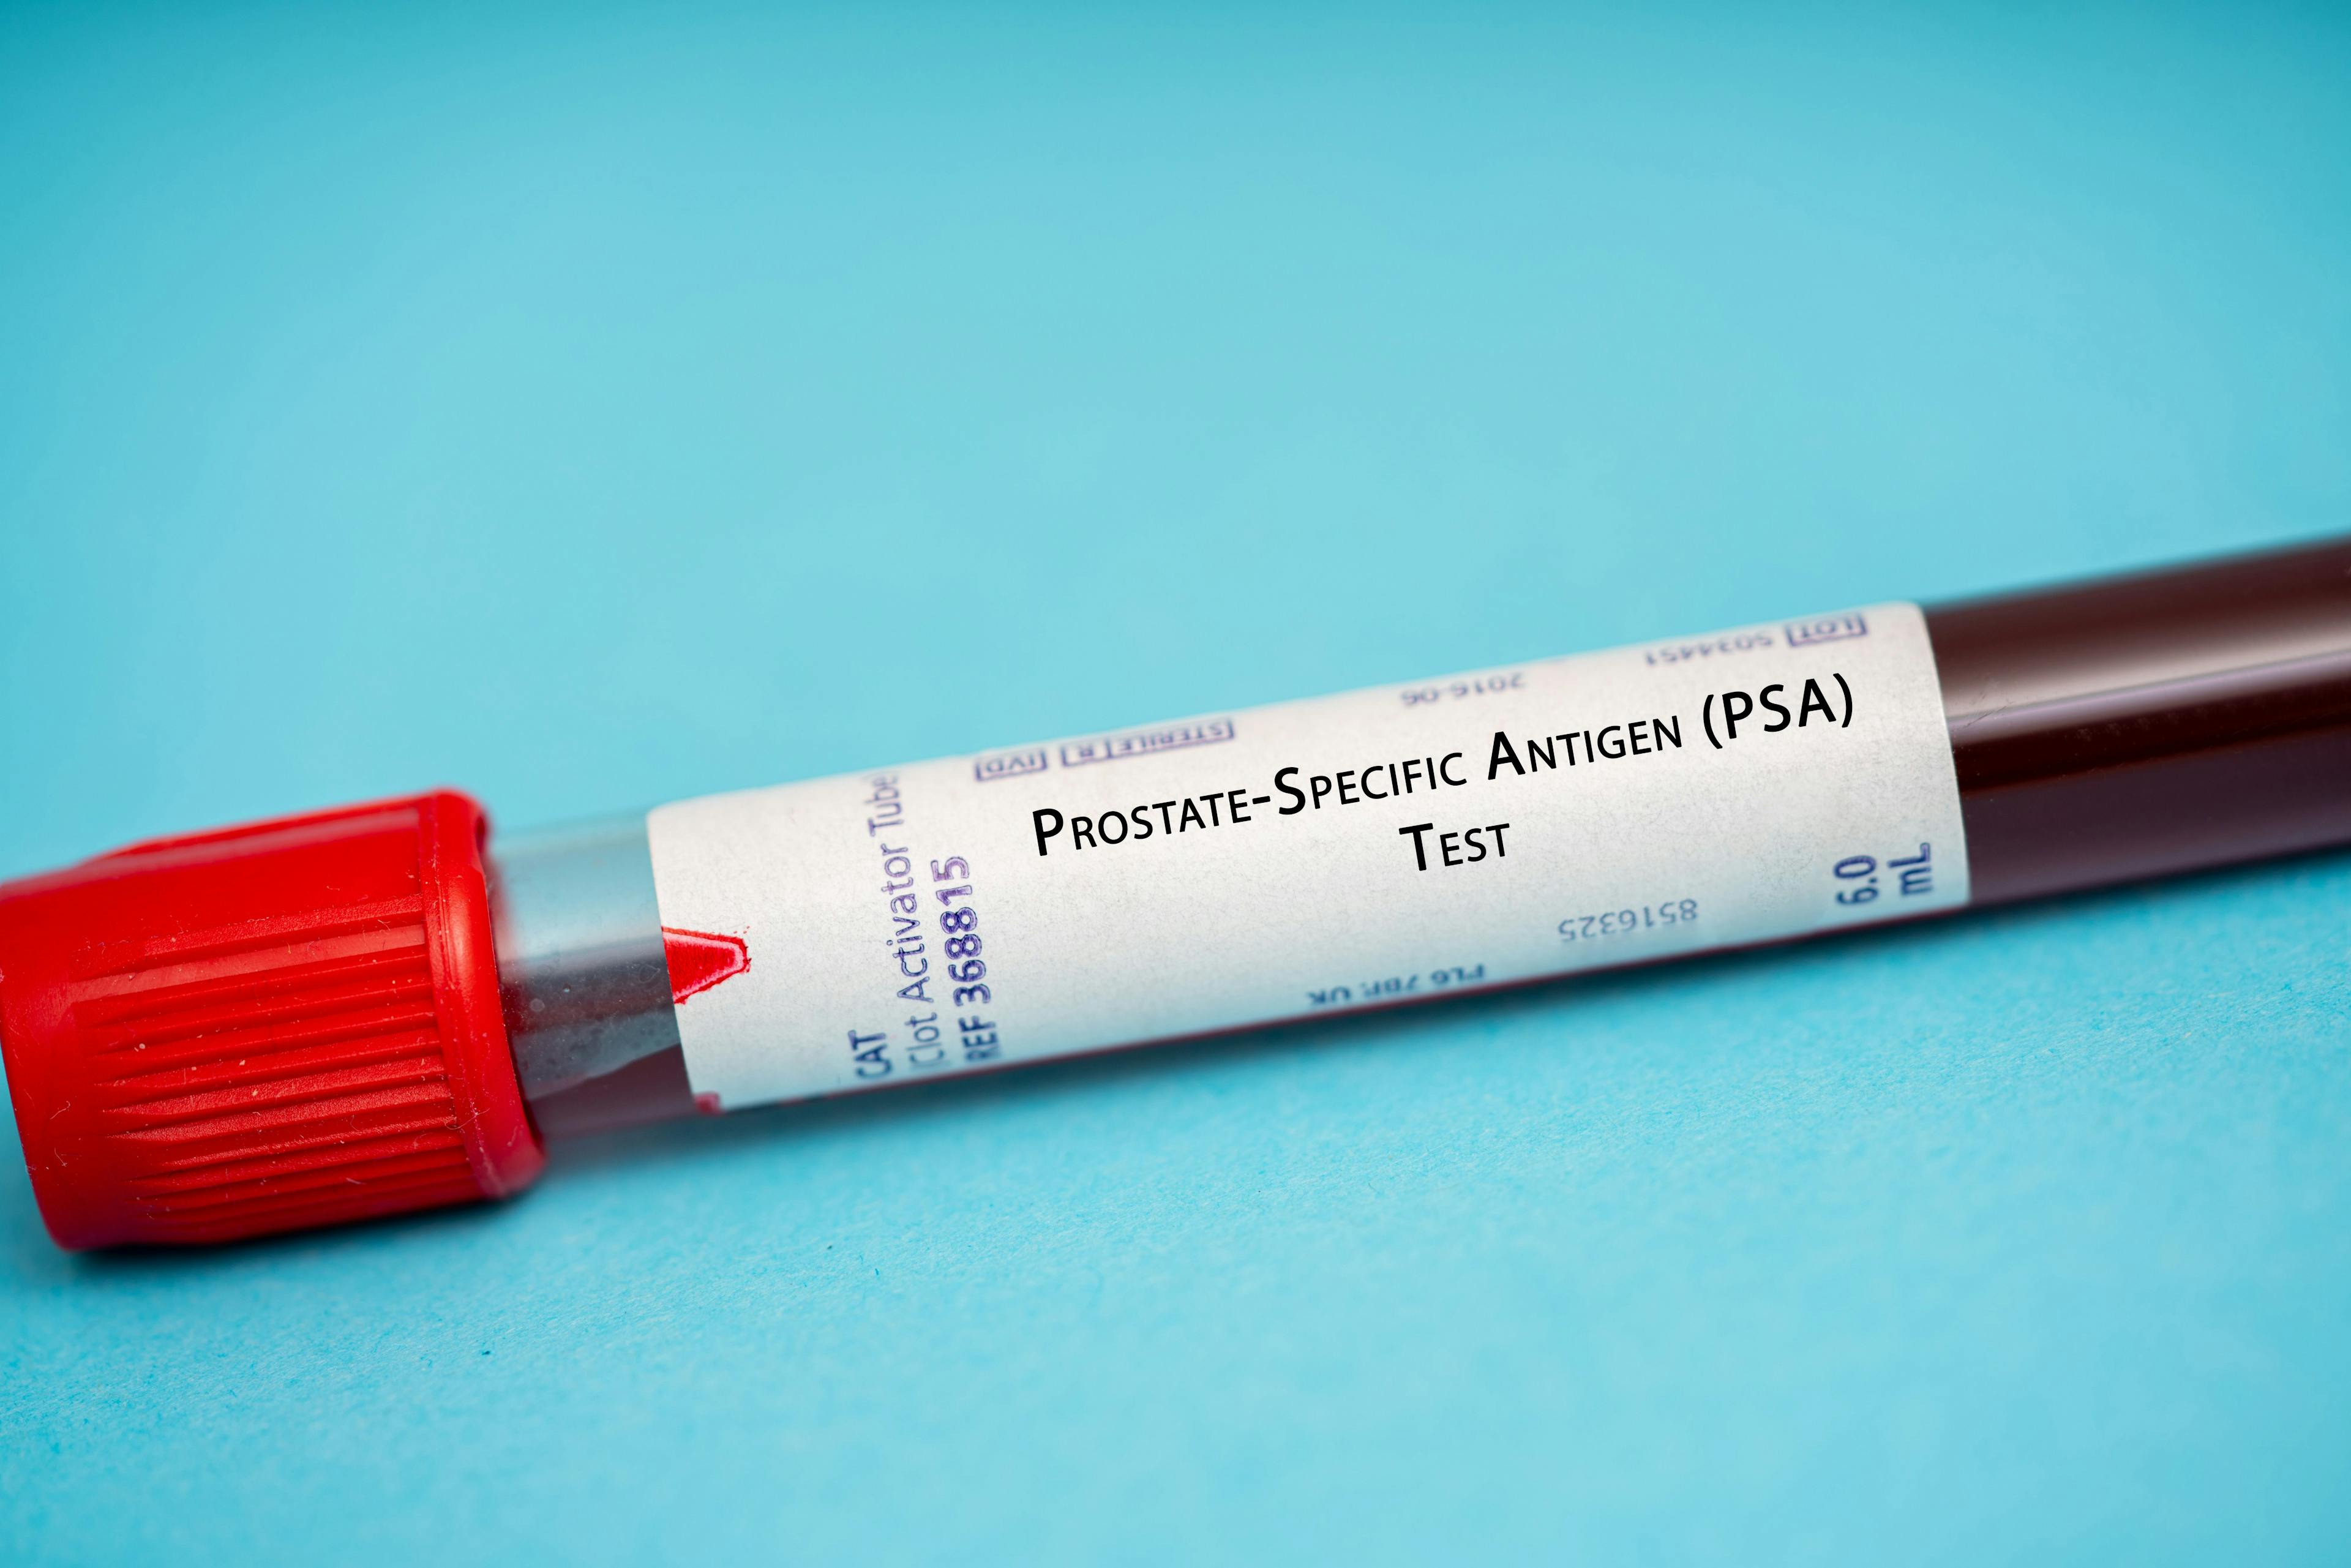 blood sample in test tube labeled "prostate-specific antigen"